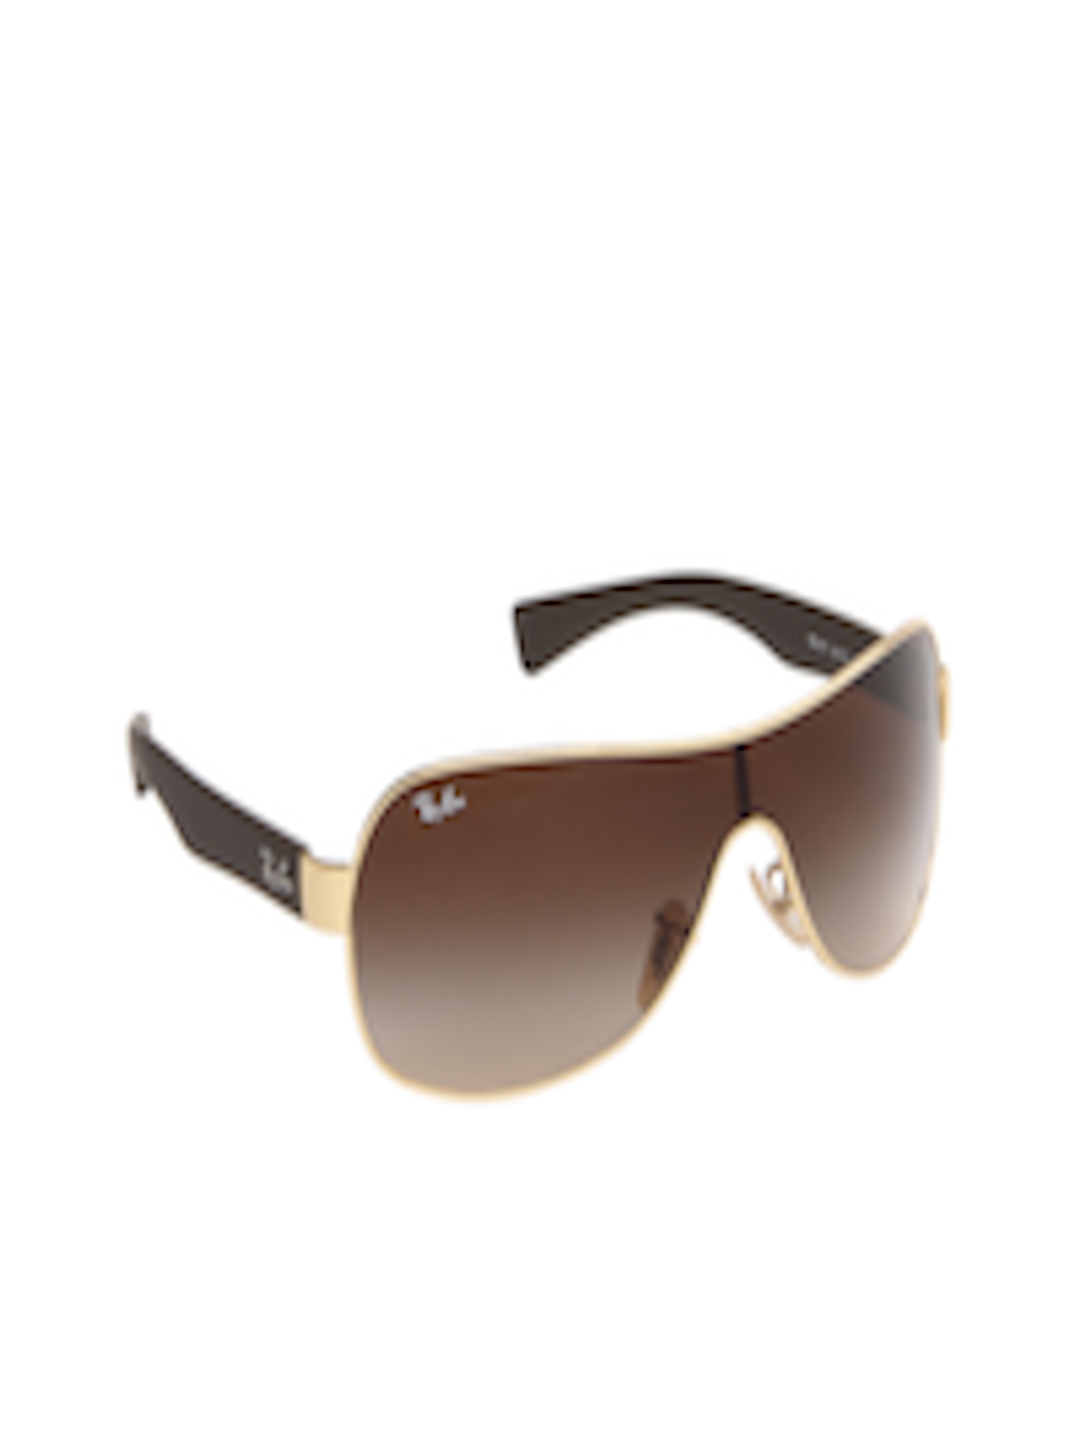 Buy Ray Ban Unisex Sunglasses - Sunglasses for Unisex 255566 | Myntra